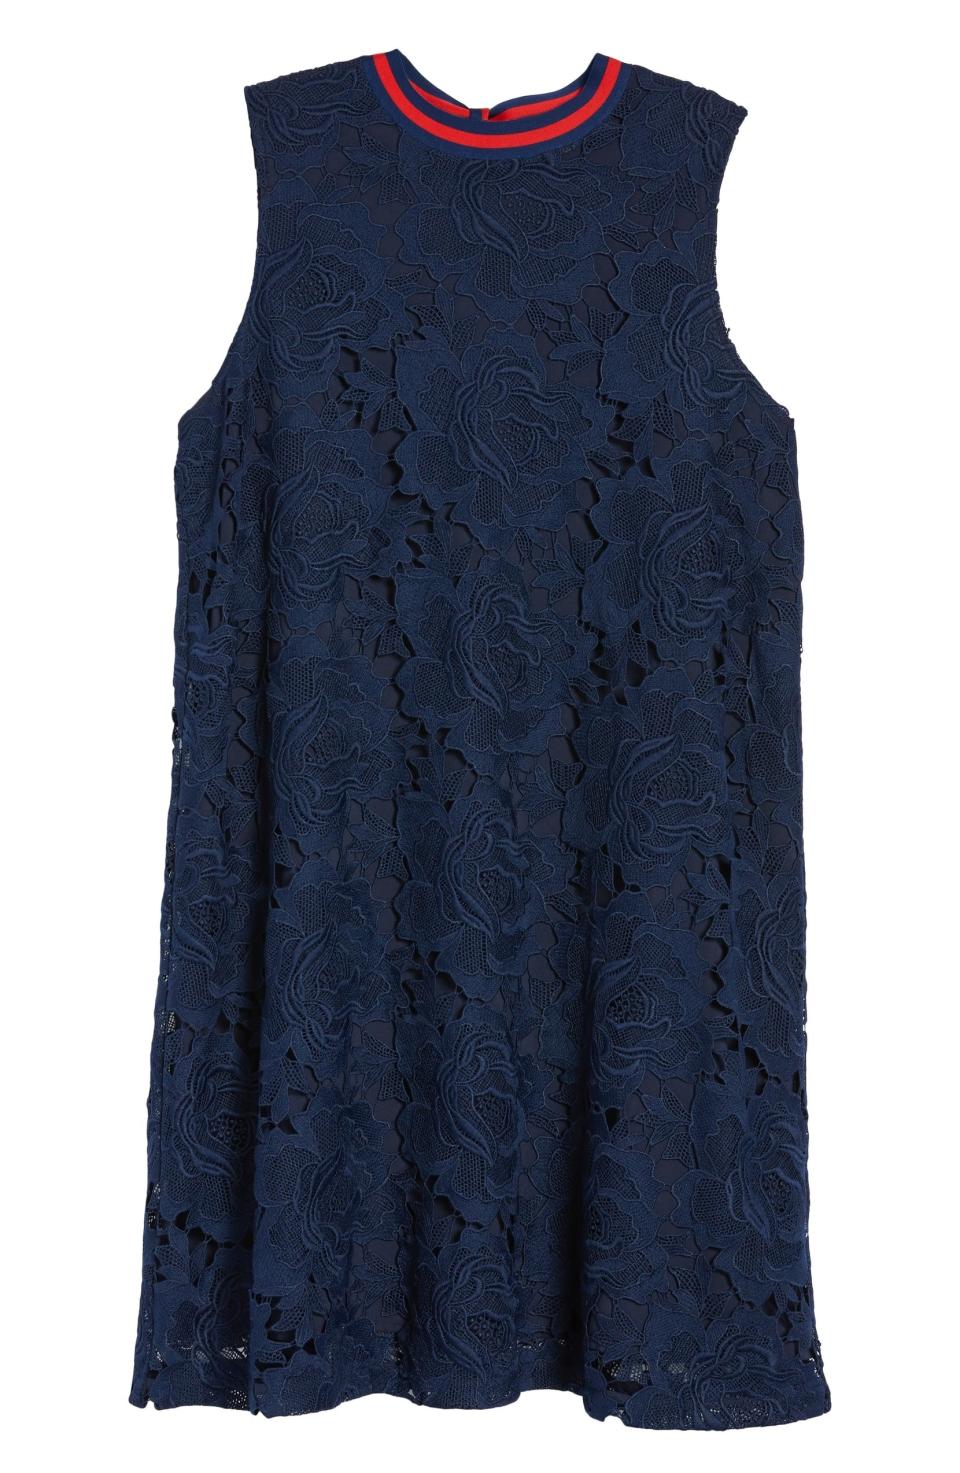 Halogen Lace Overlay Sleeveless Shift Dress, $129 $85.90, Nordstrom